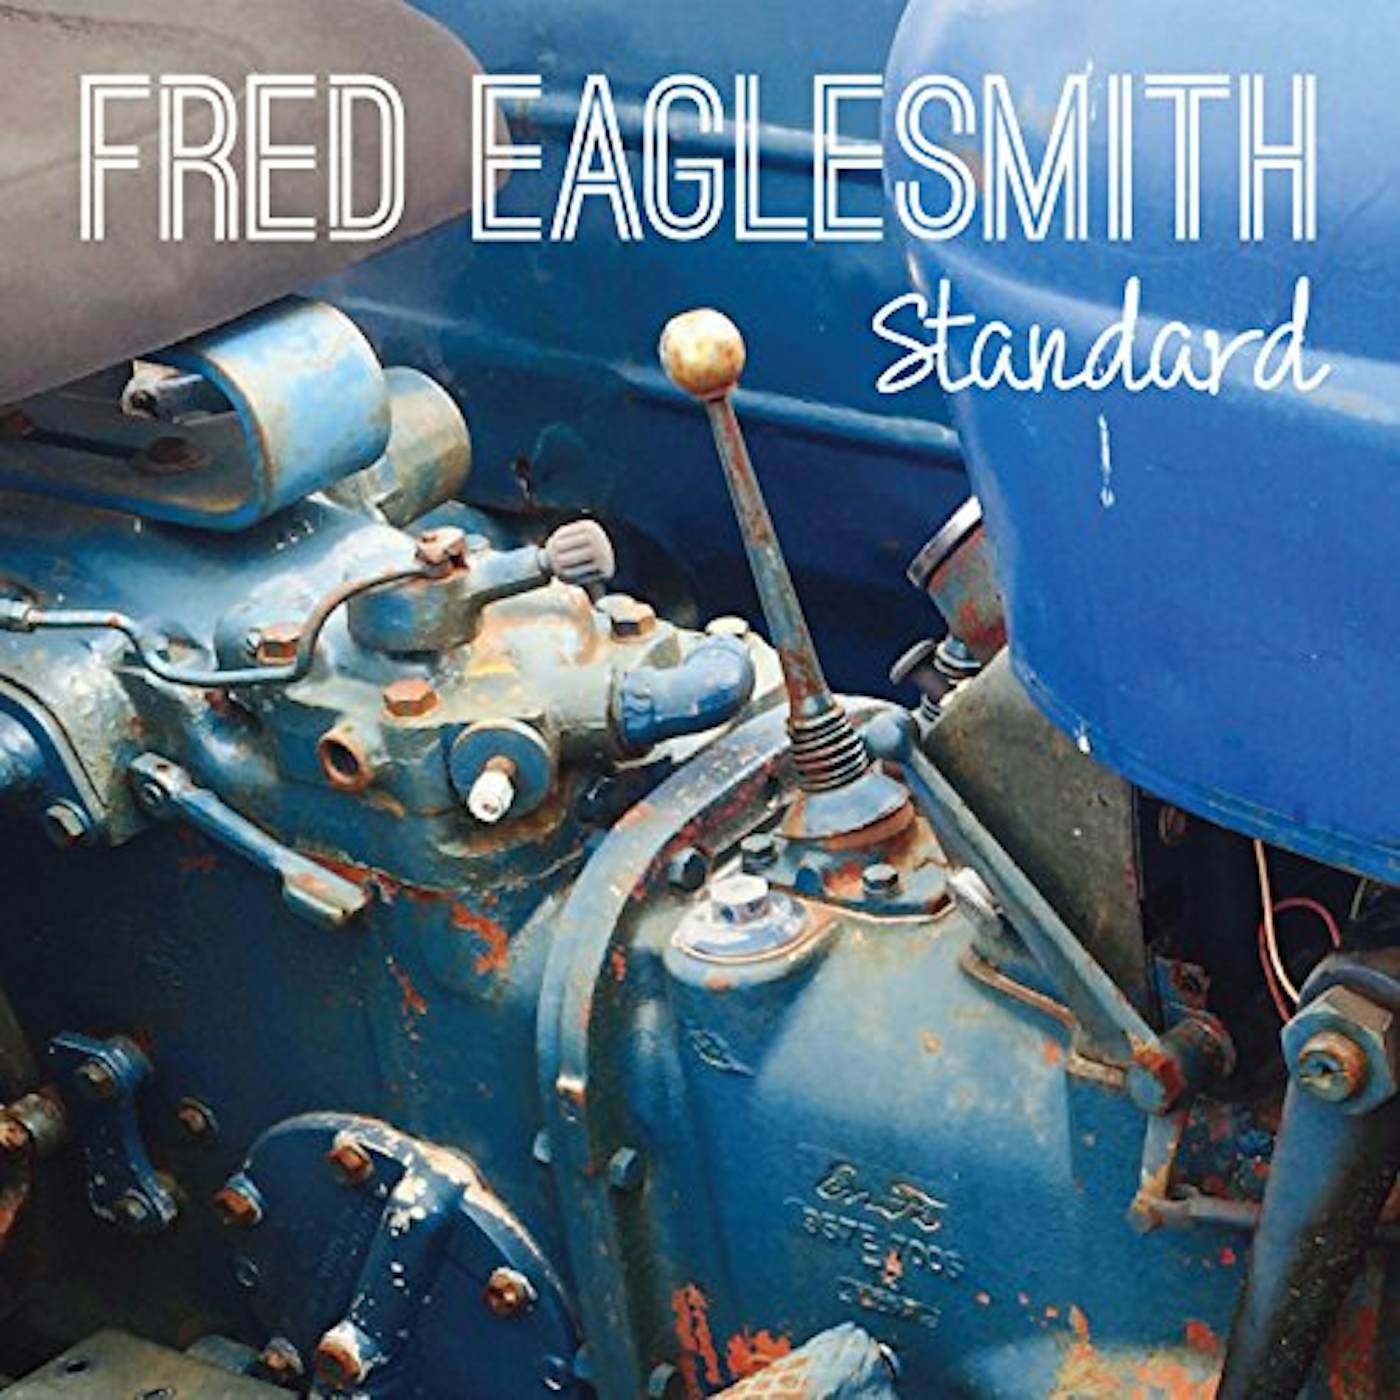 Fred Eaglesmith Standard Vinyl Record